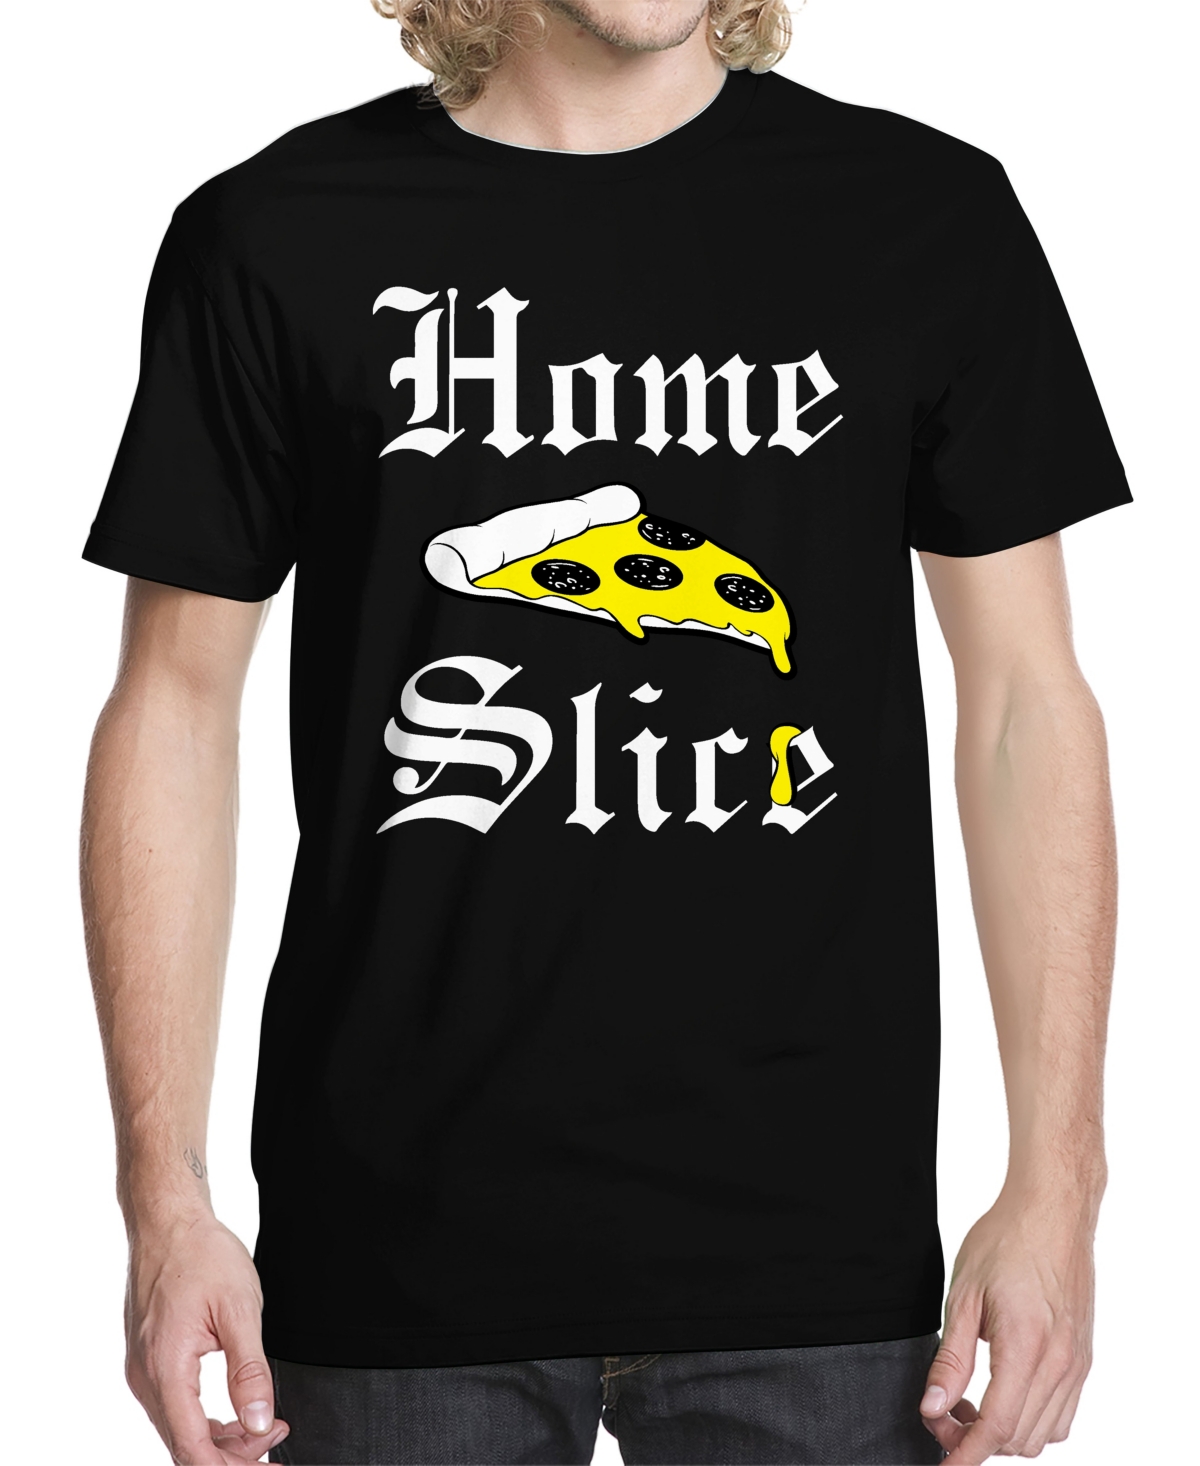 Men's Home Slice Graphic T-shirt - Black